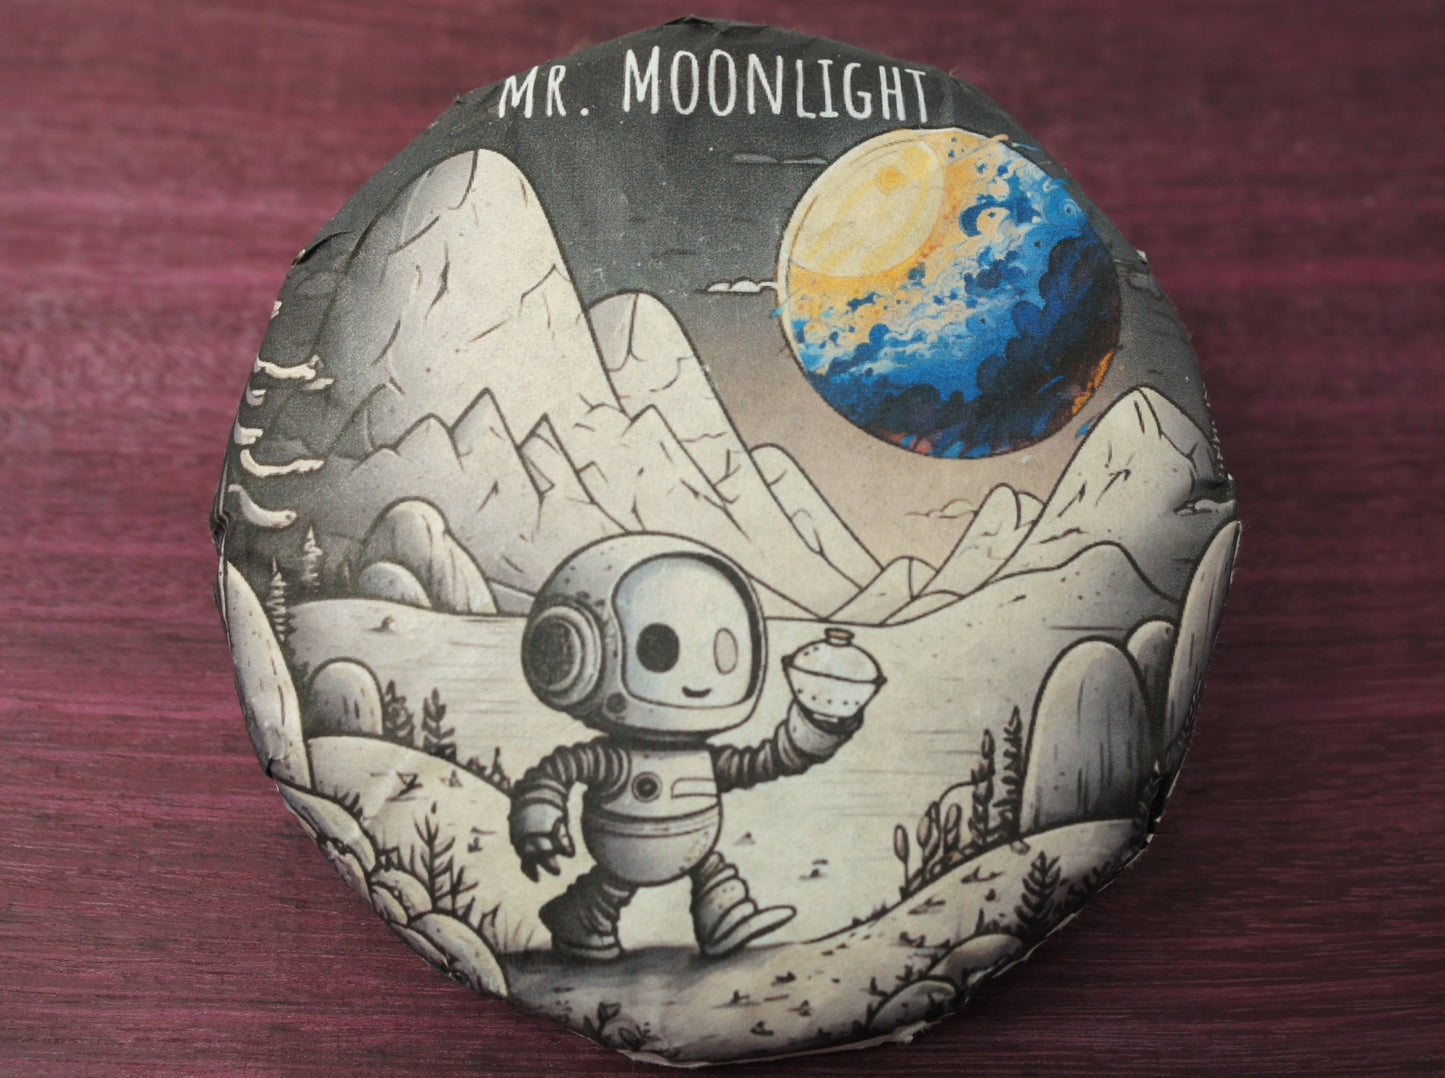 Mr. Moonlight 100g Bai Mudan cake